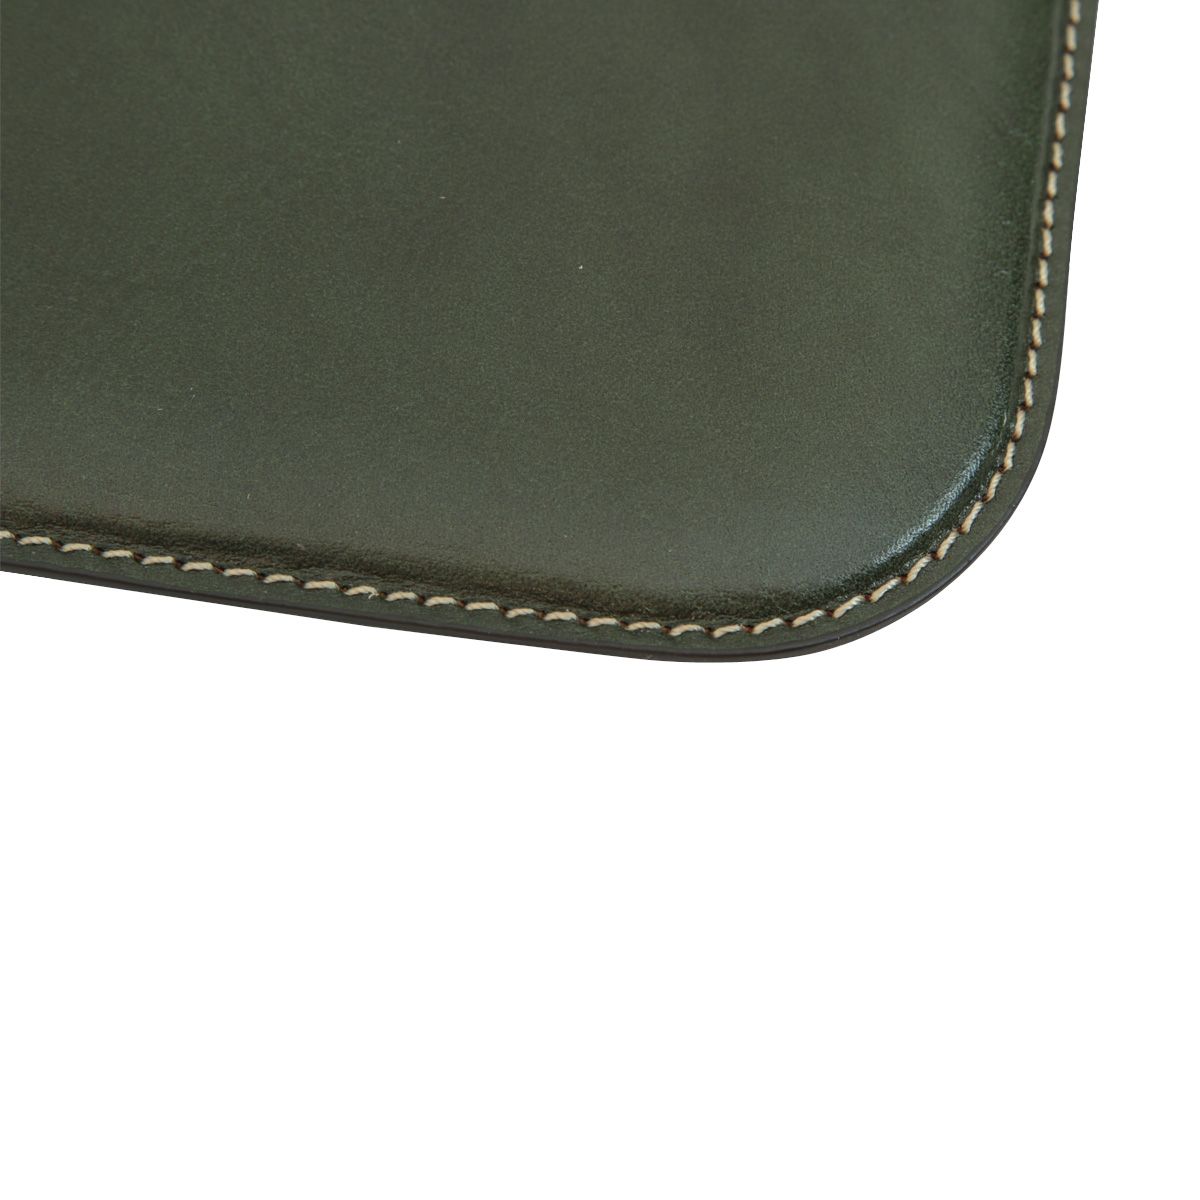 Leather Desk pad - green | 760089VE | EURO | Old Angler Firenze